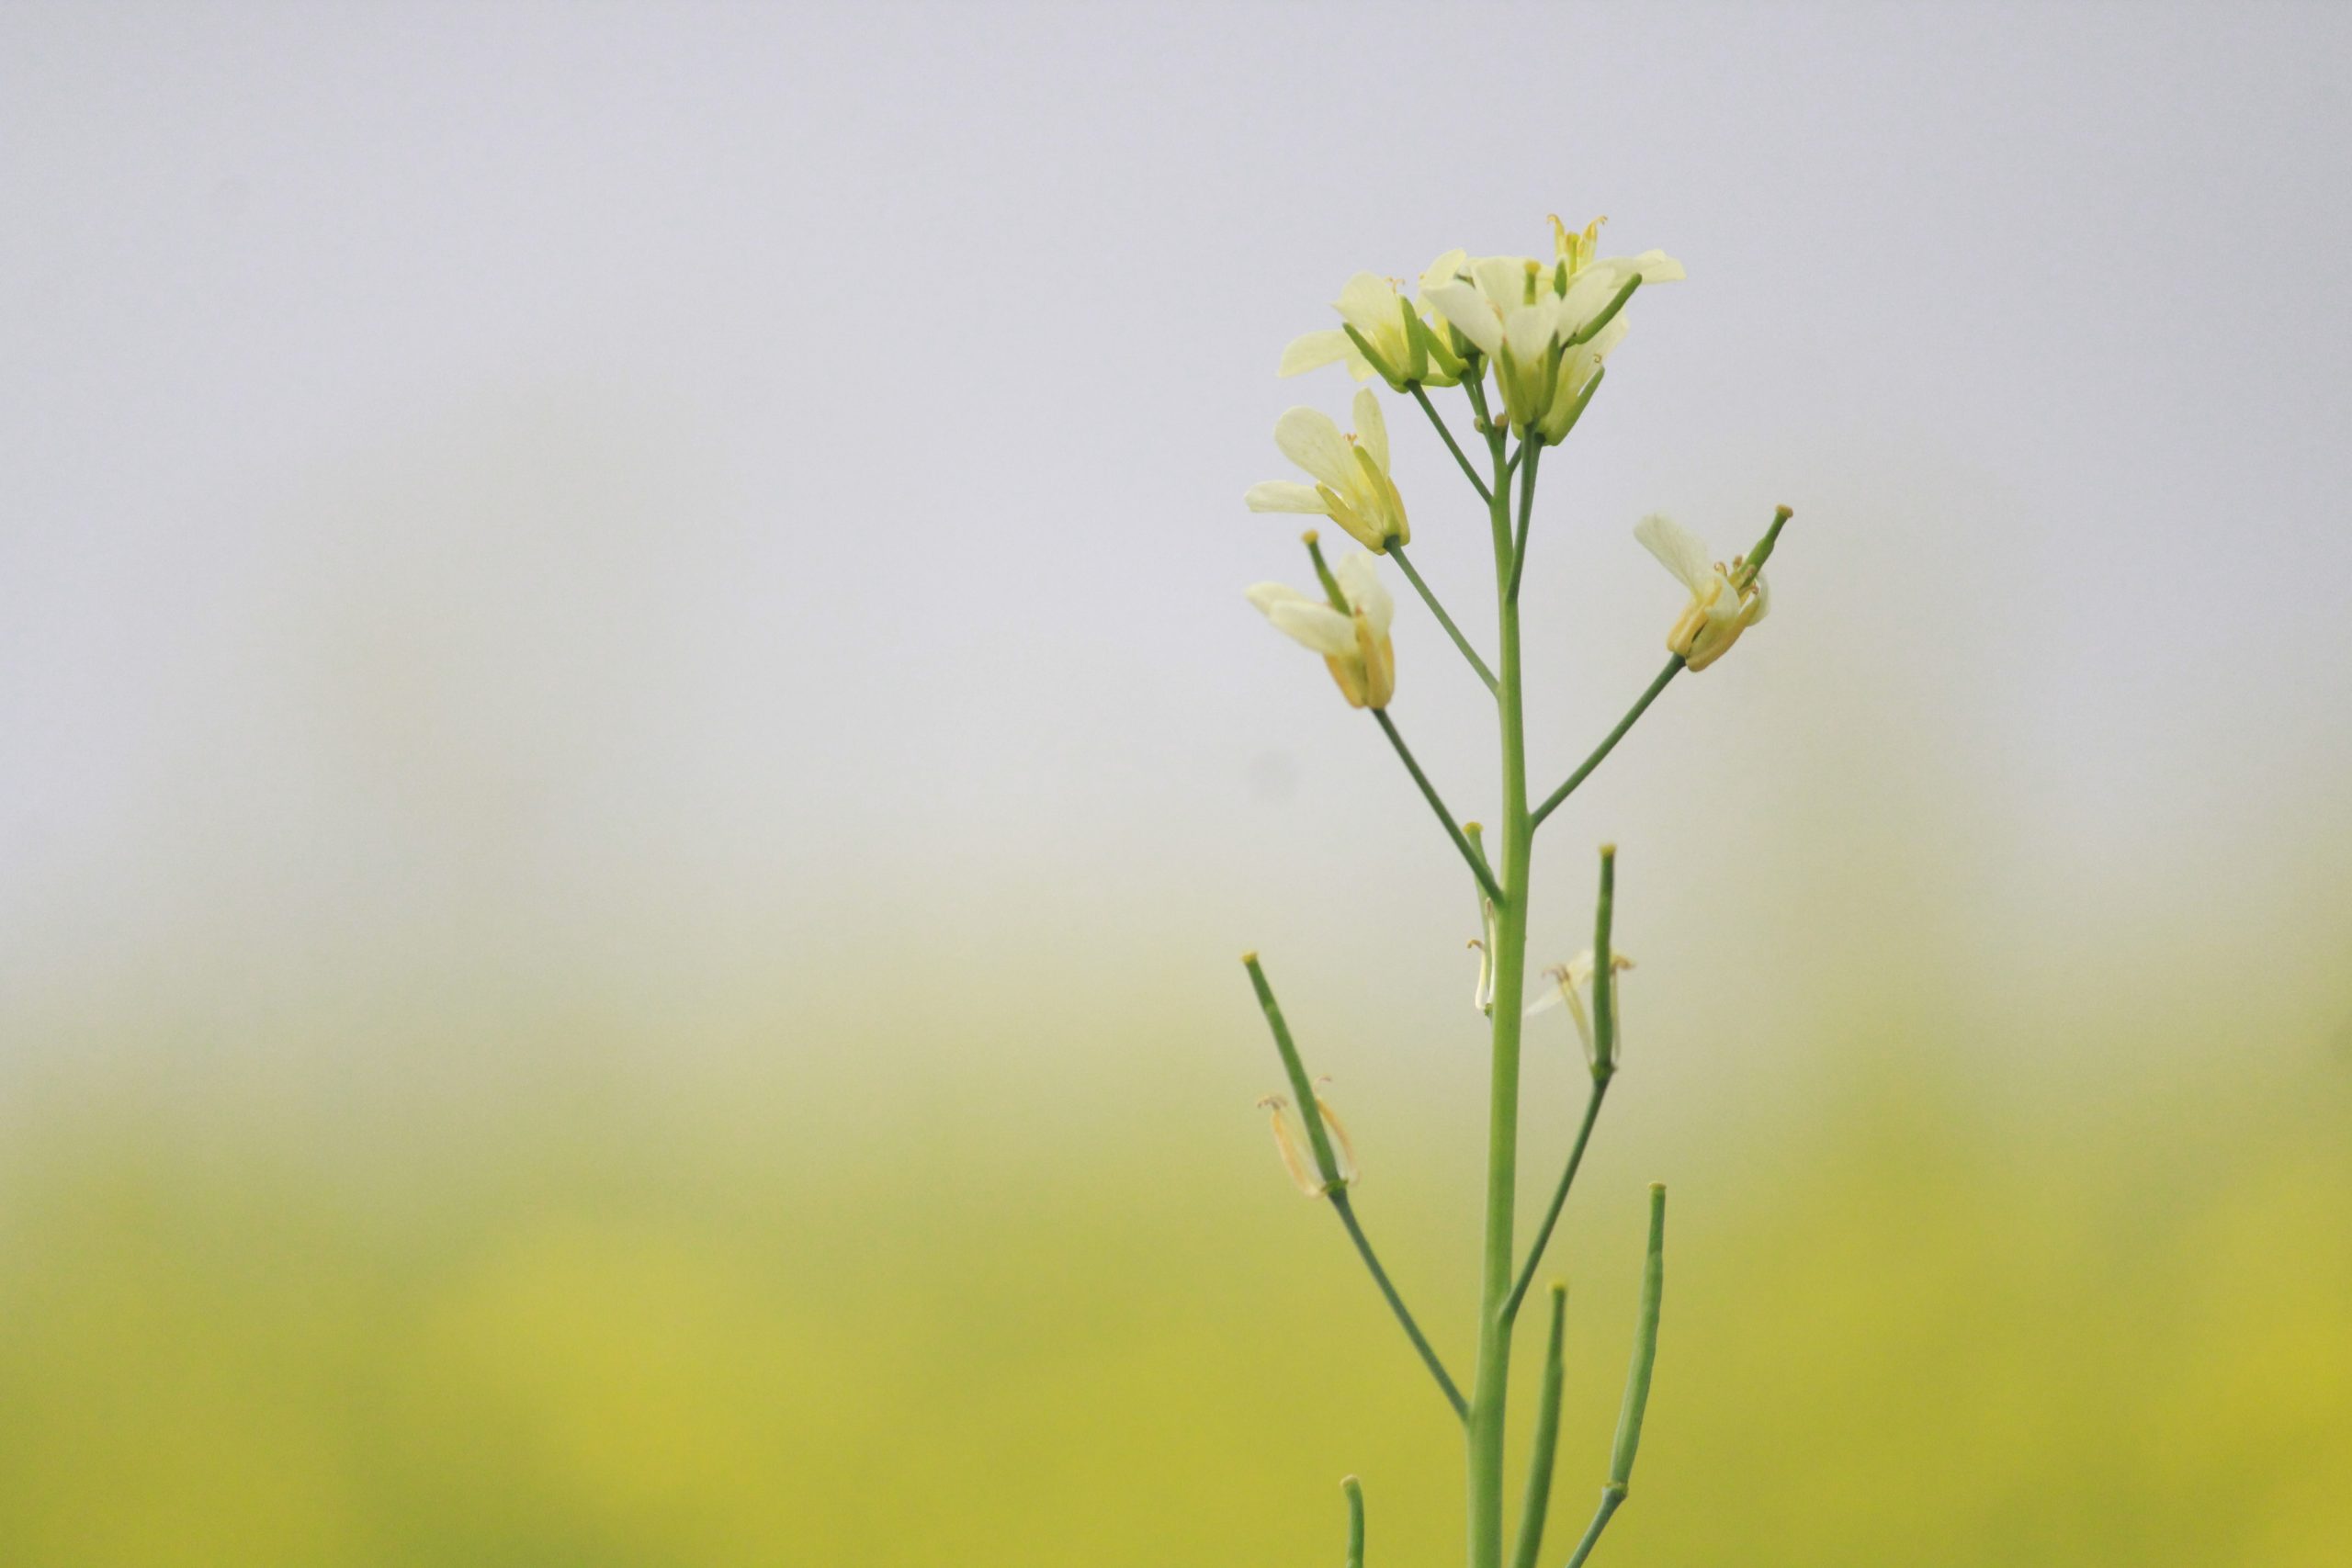 A mustard plant